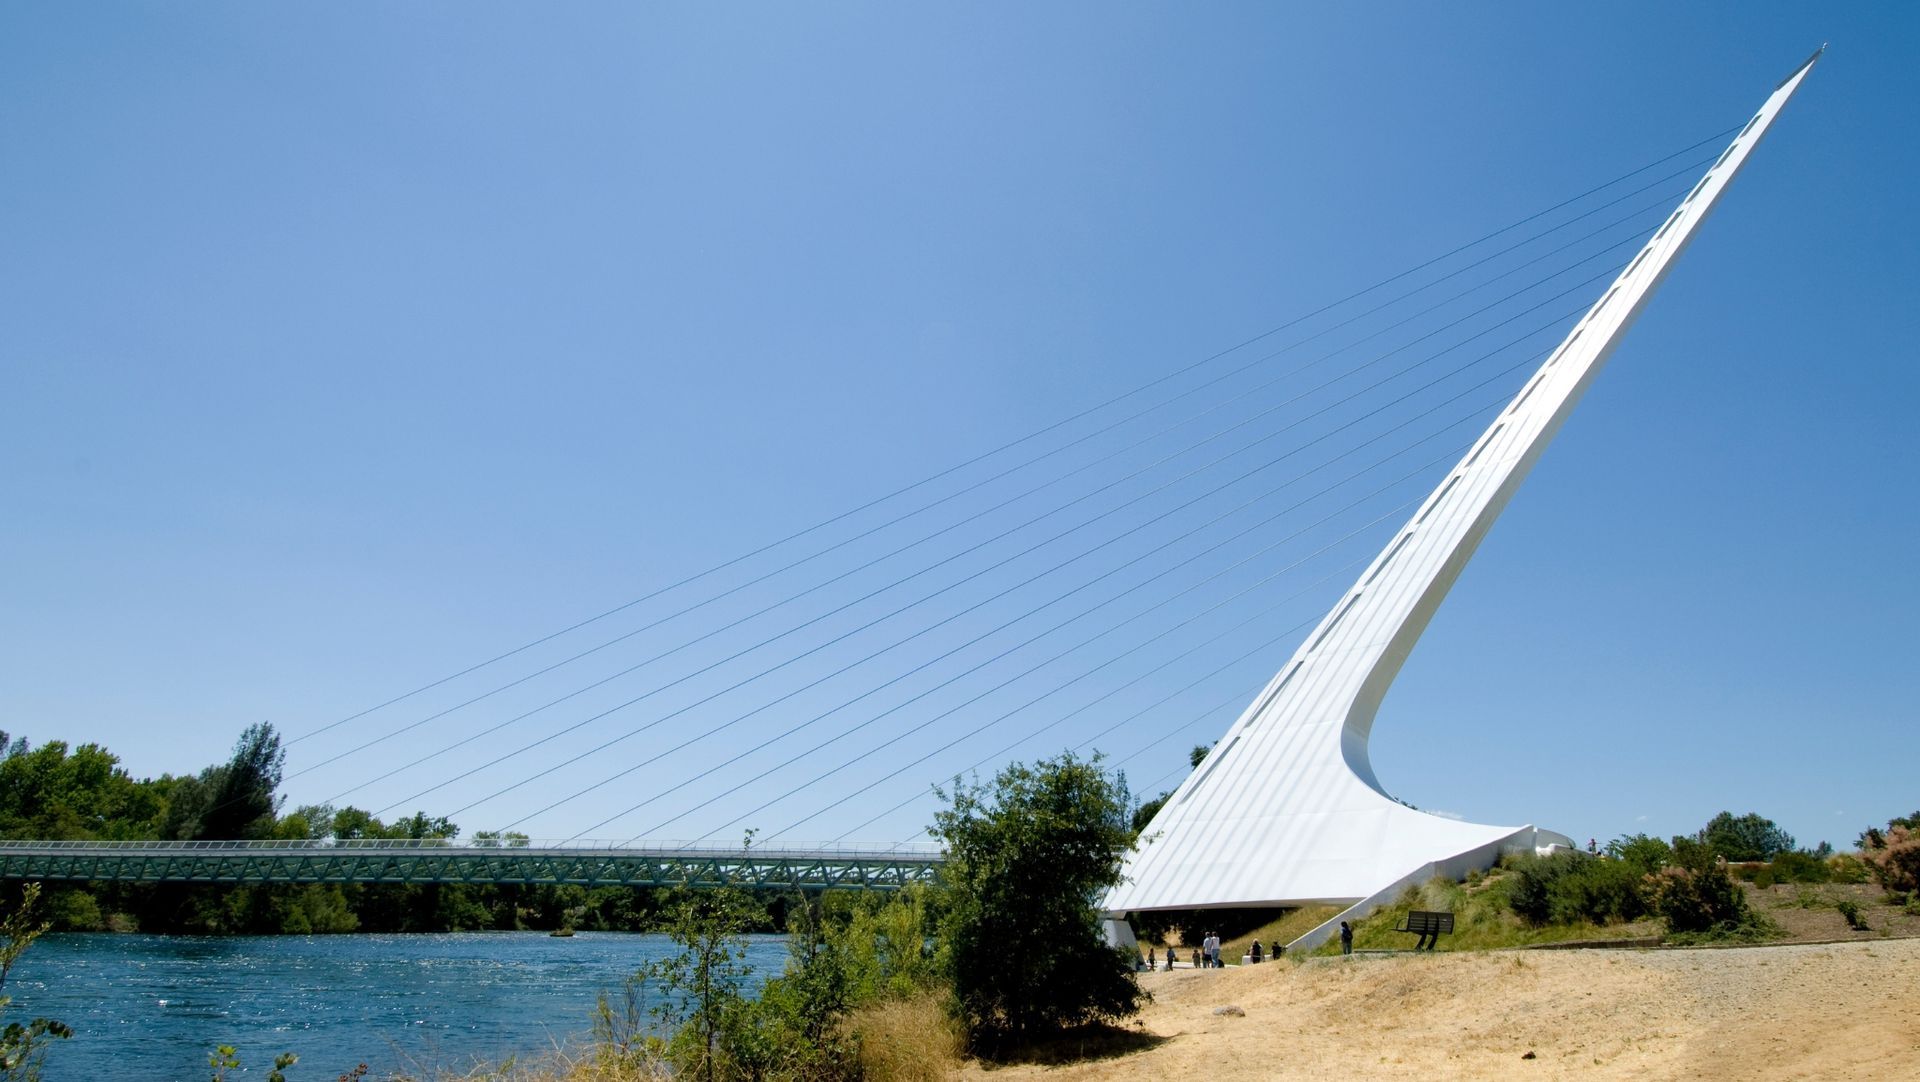 
Located in the heart of Redding, CA, the Sundial Bridge crosses the Sacramento River.
